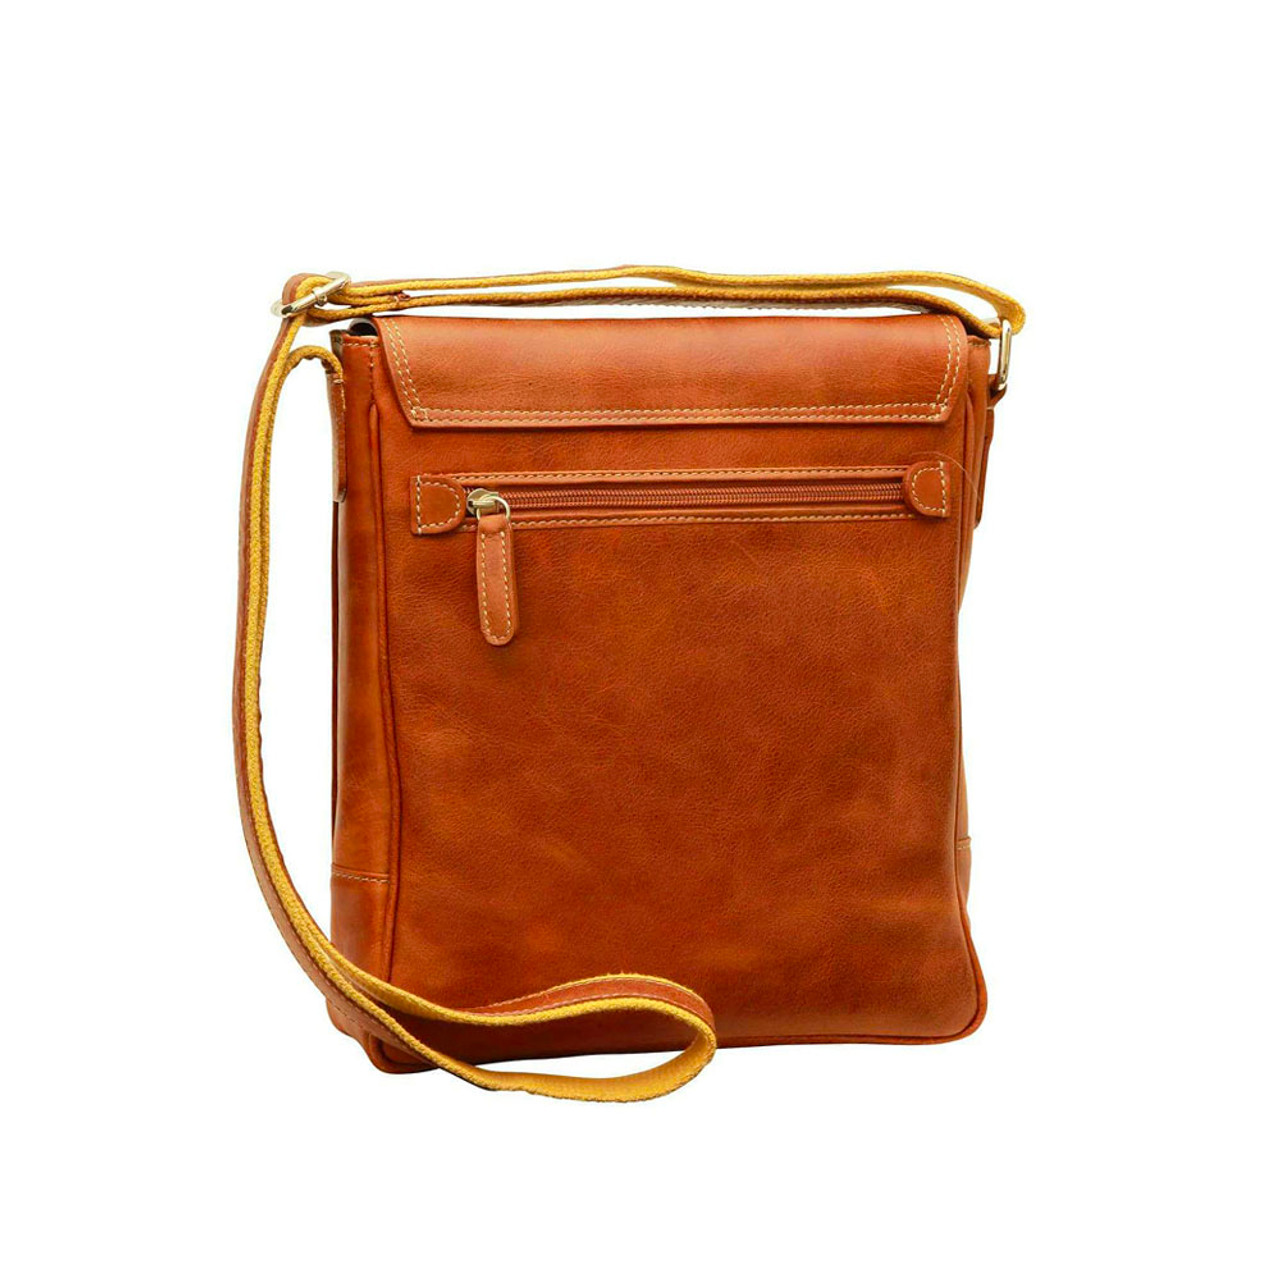 Old Angler Classic Leather iPad Messenger Bag